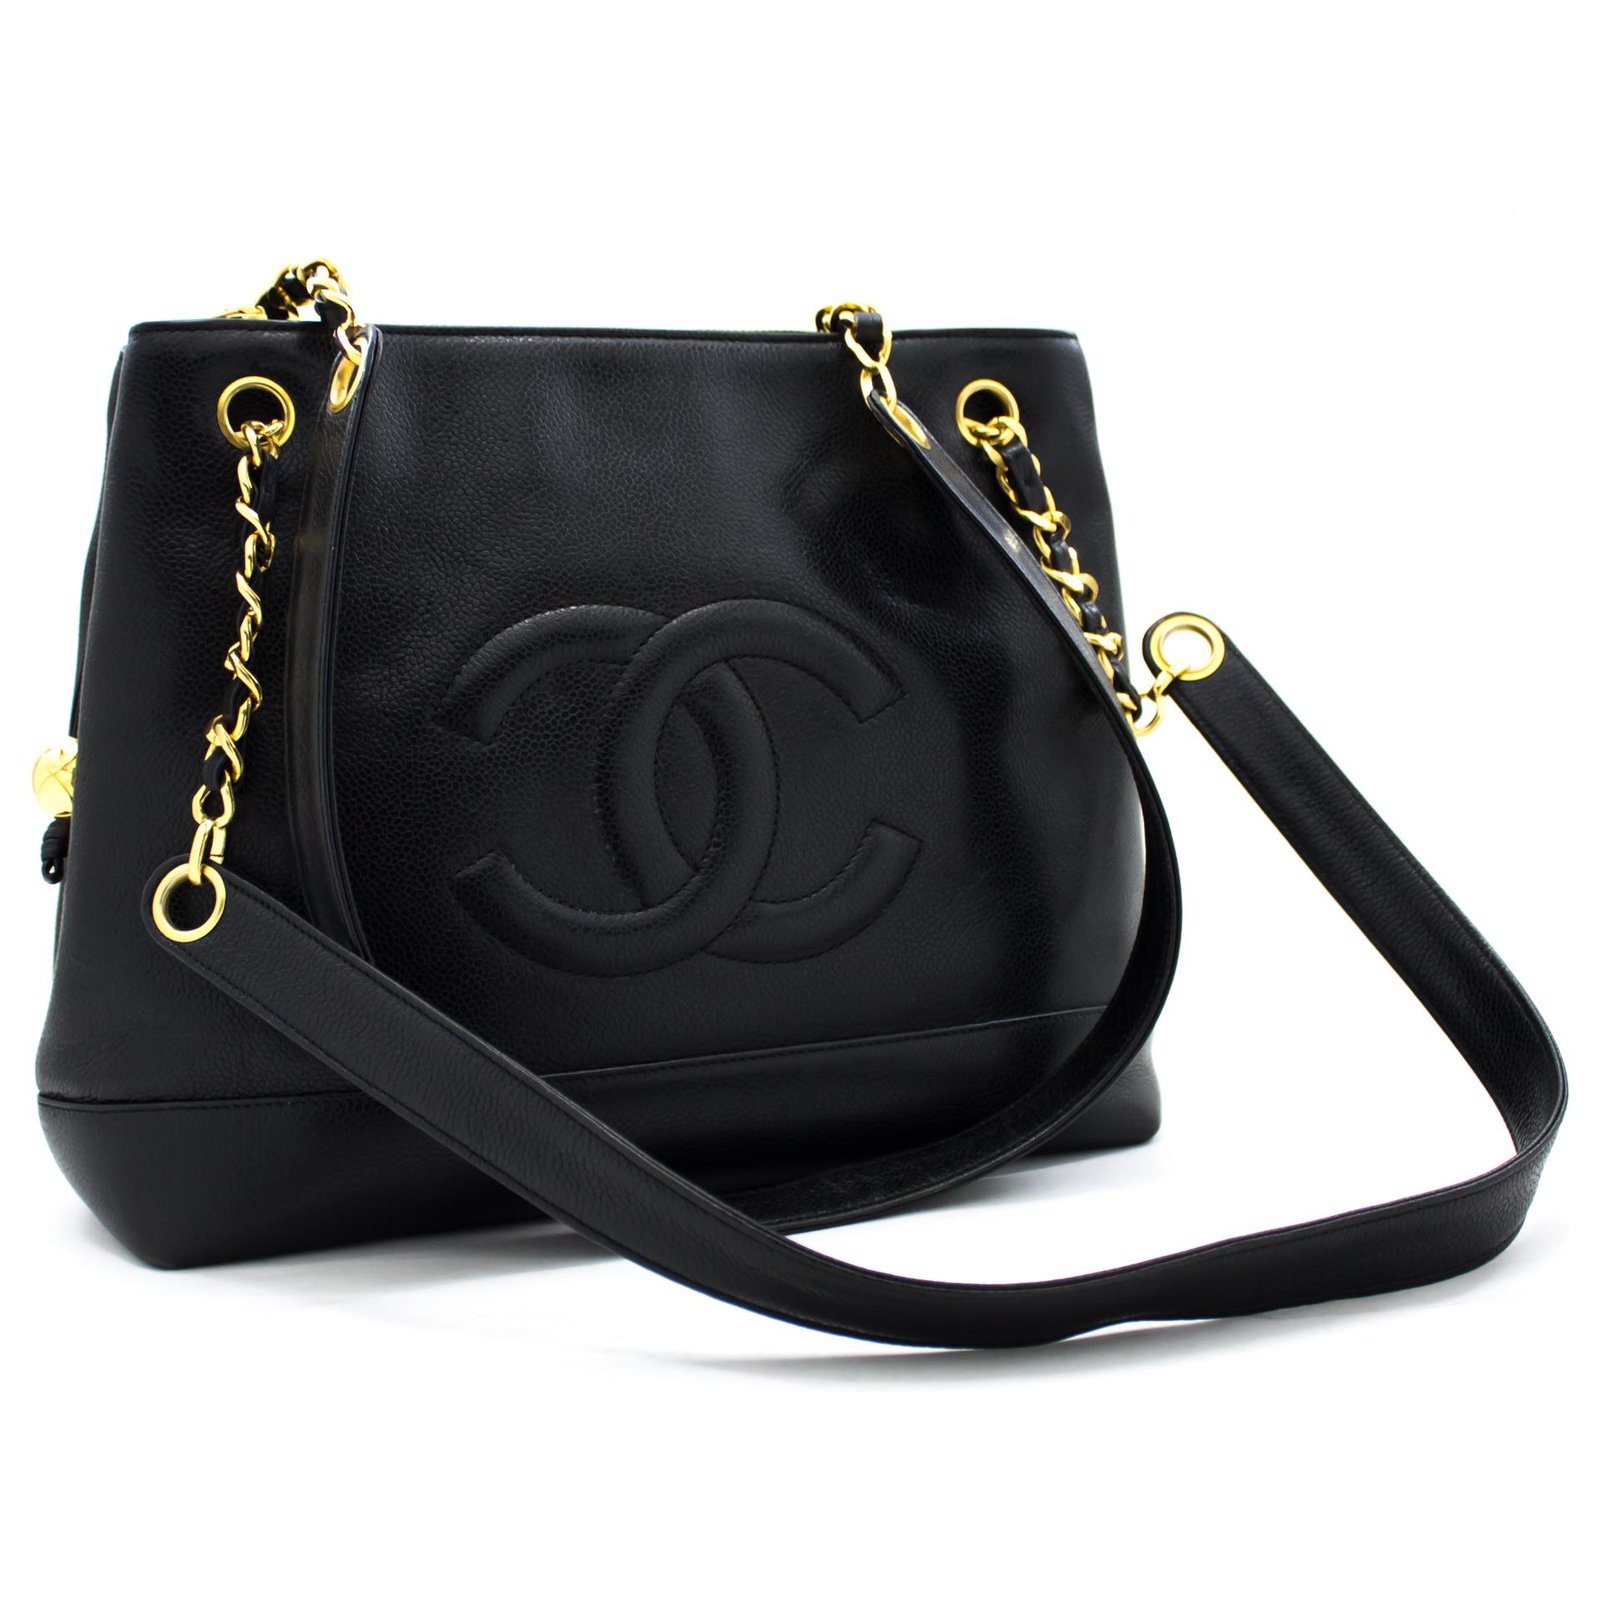 Chanel Chanel Black Caviar leather Tote shoulder bag Gold Chain CC